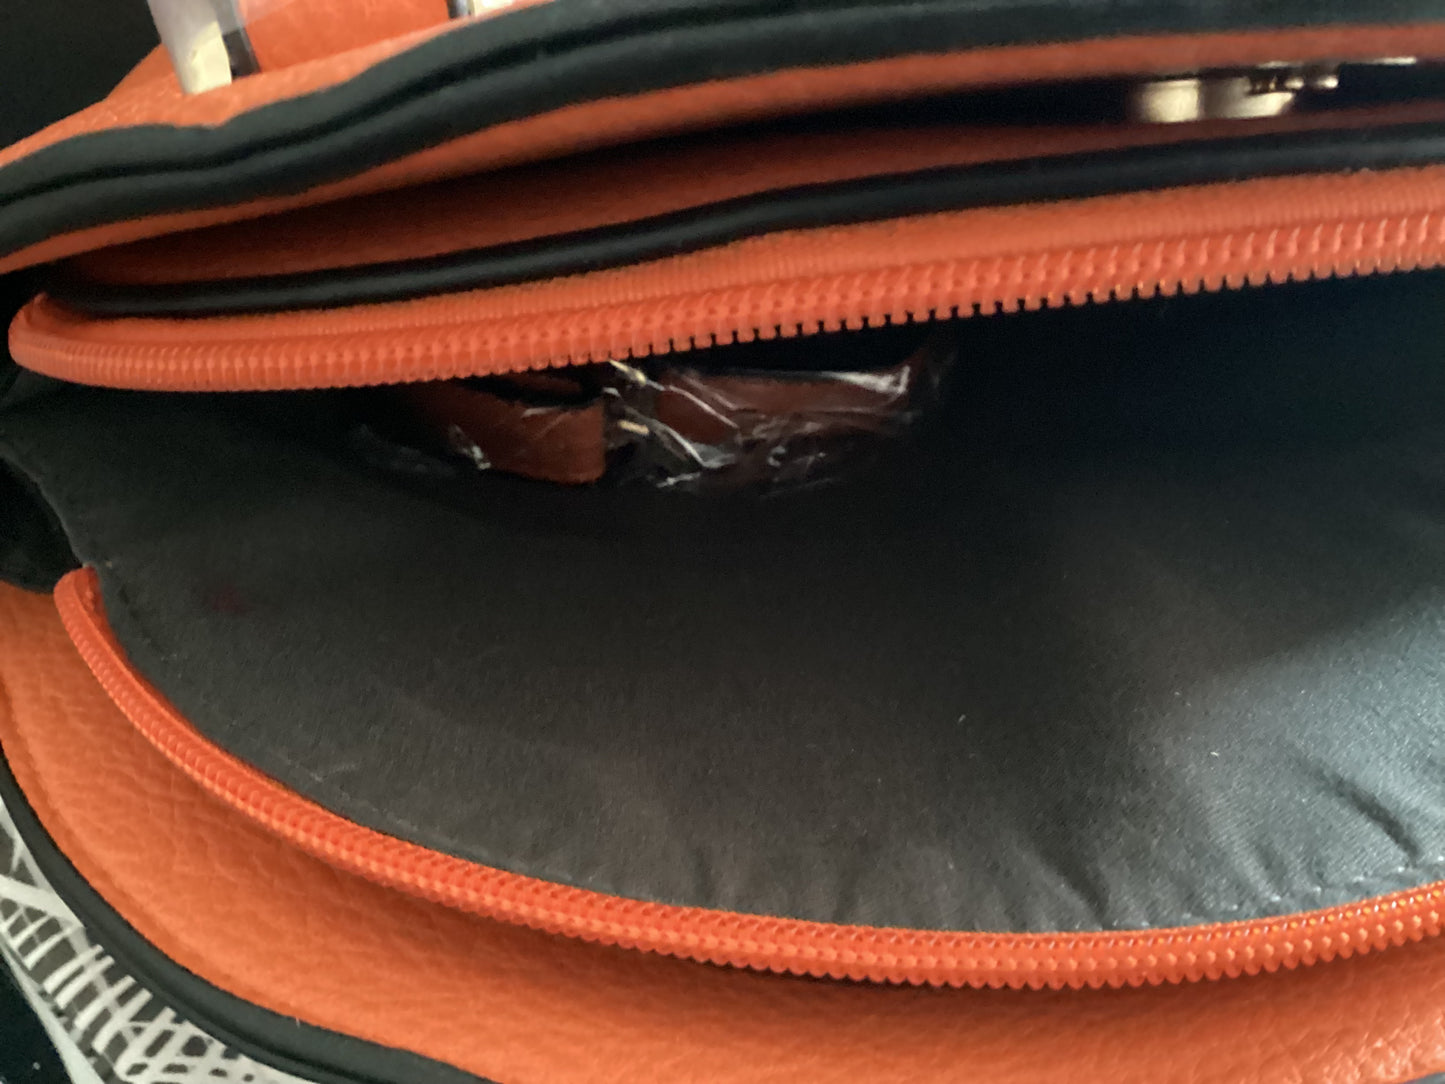 Soft orange leather pockt book includes wallet and strap